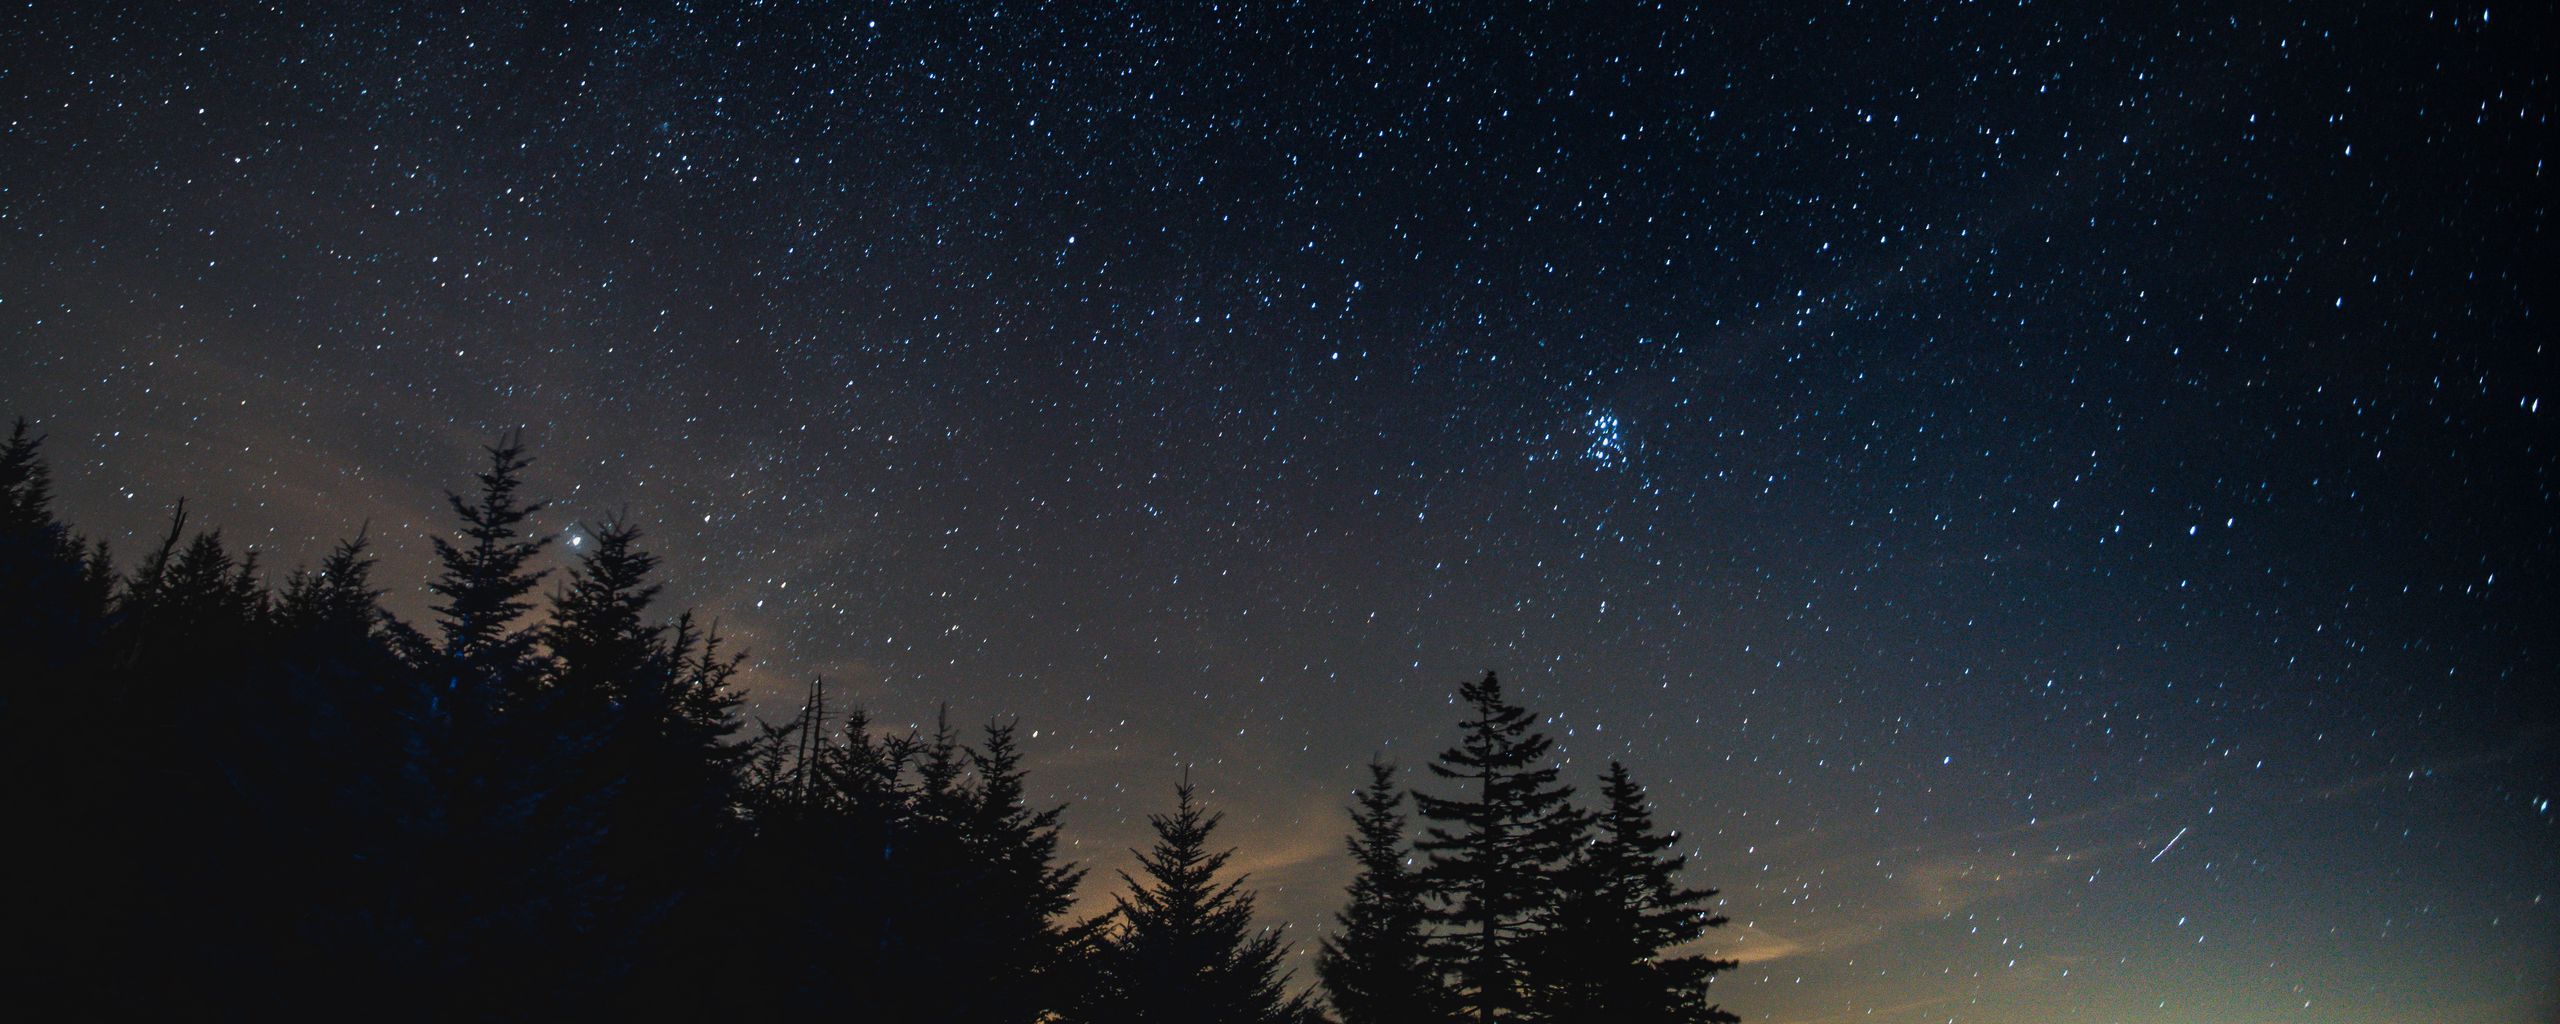 Download wallpaper 2560x1024 starry sky, night, trees, night